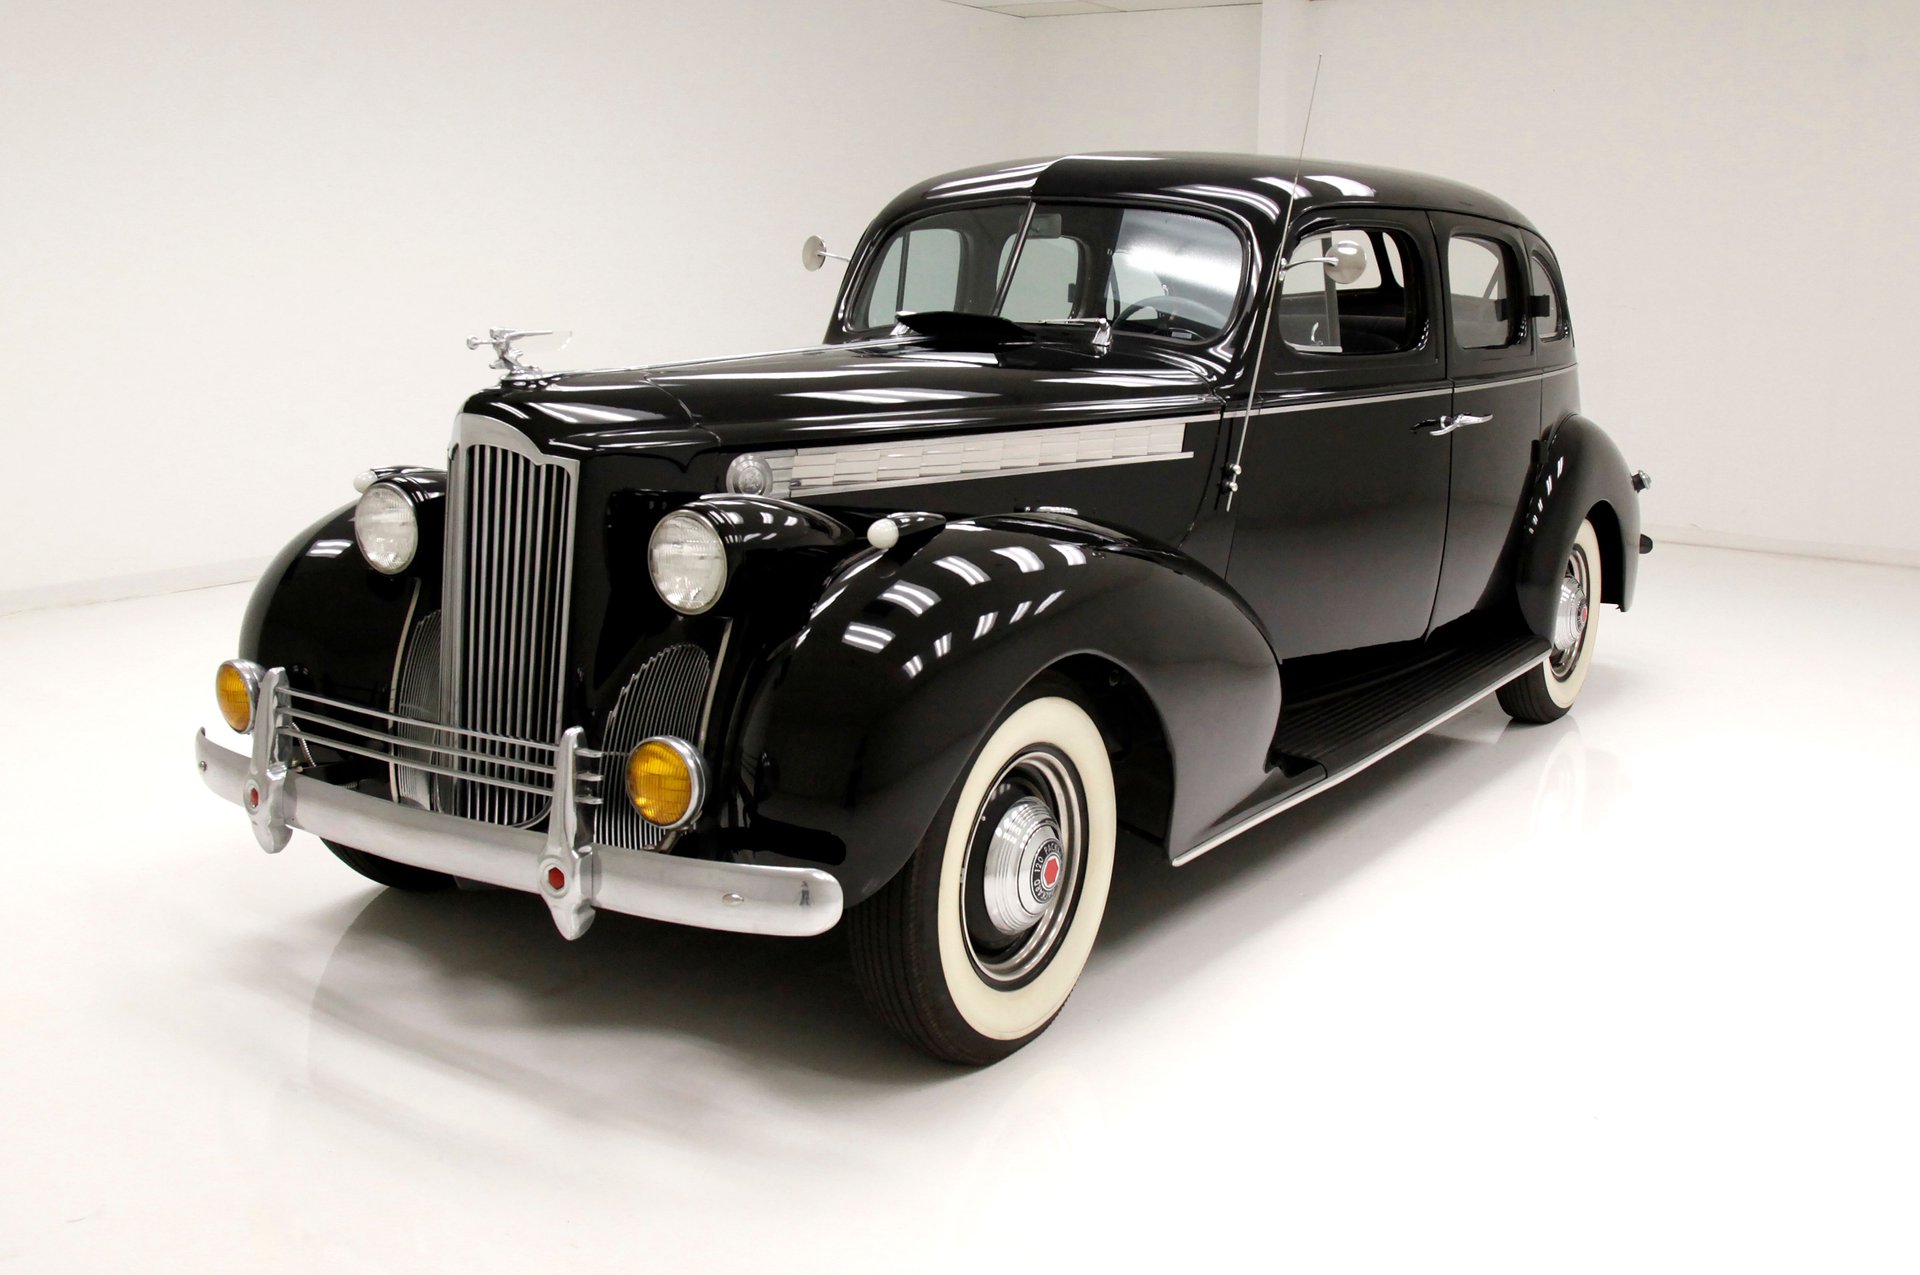 David's first collector car: a 1940 Packard 120 Sedan.